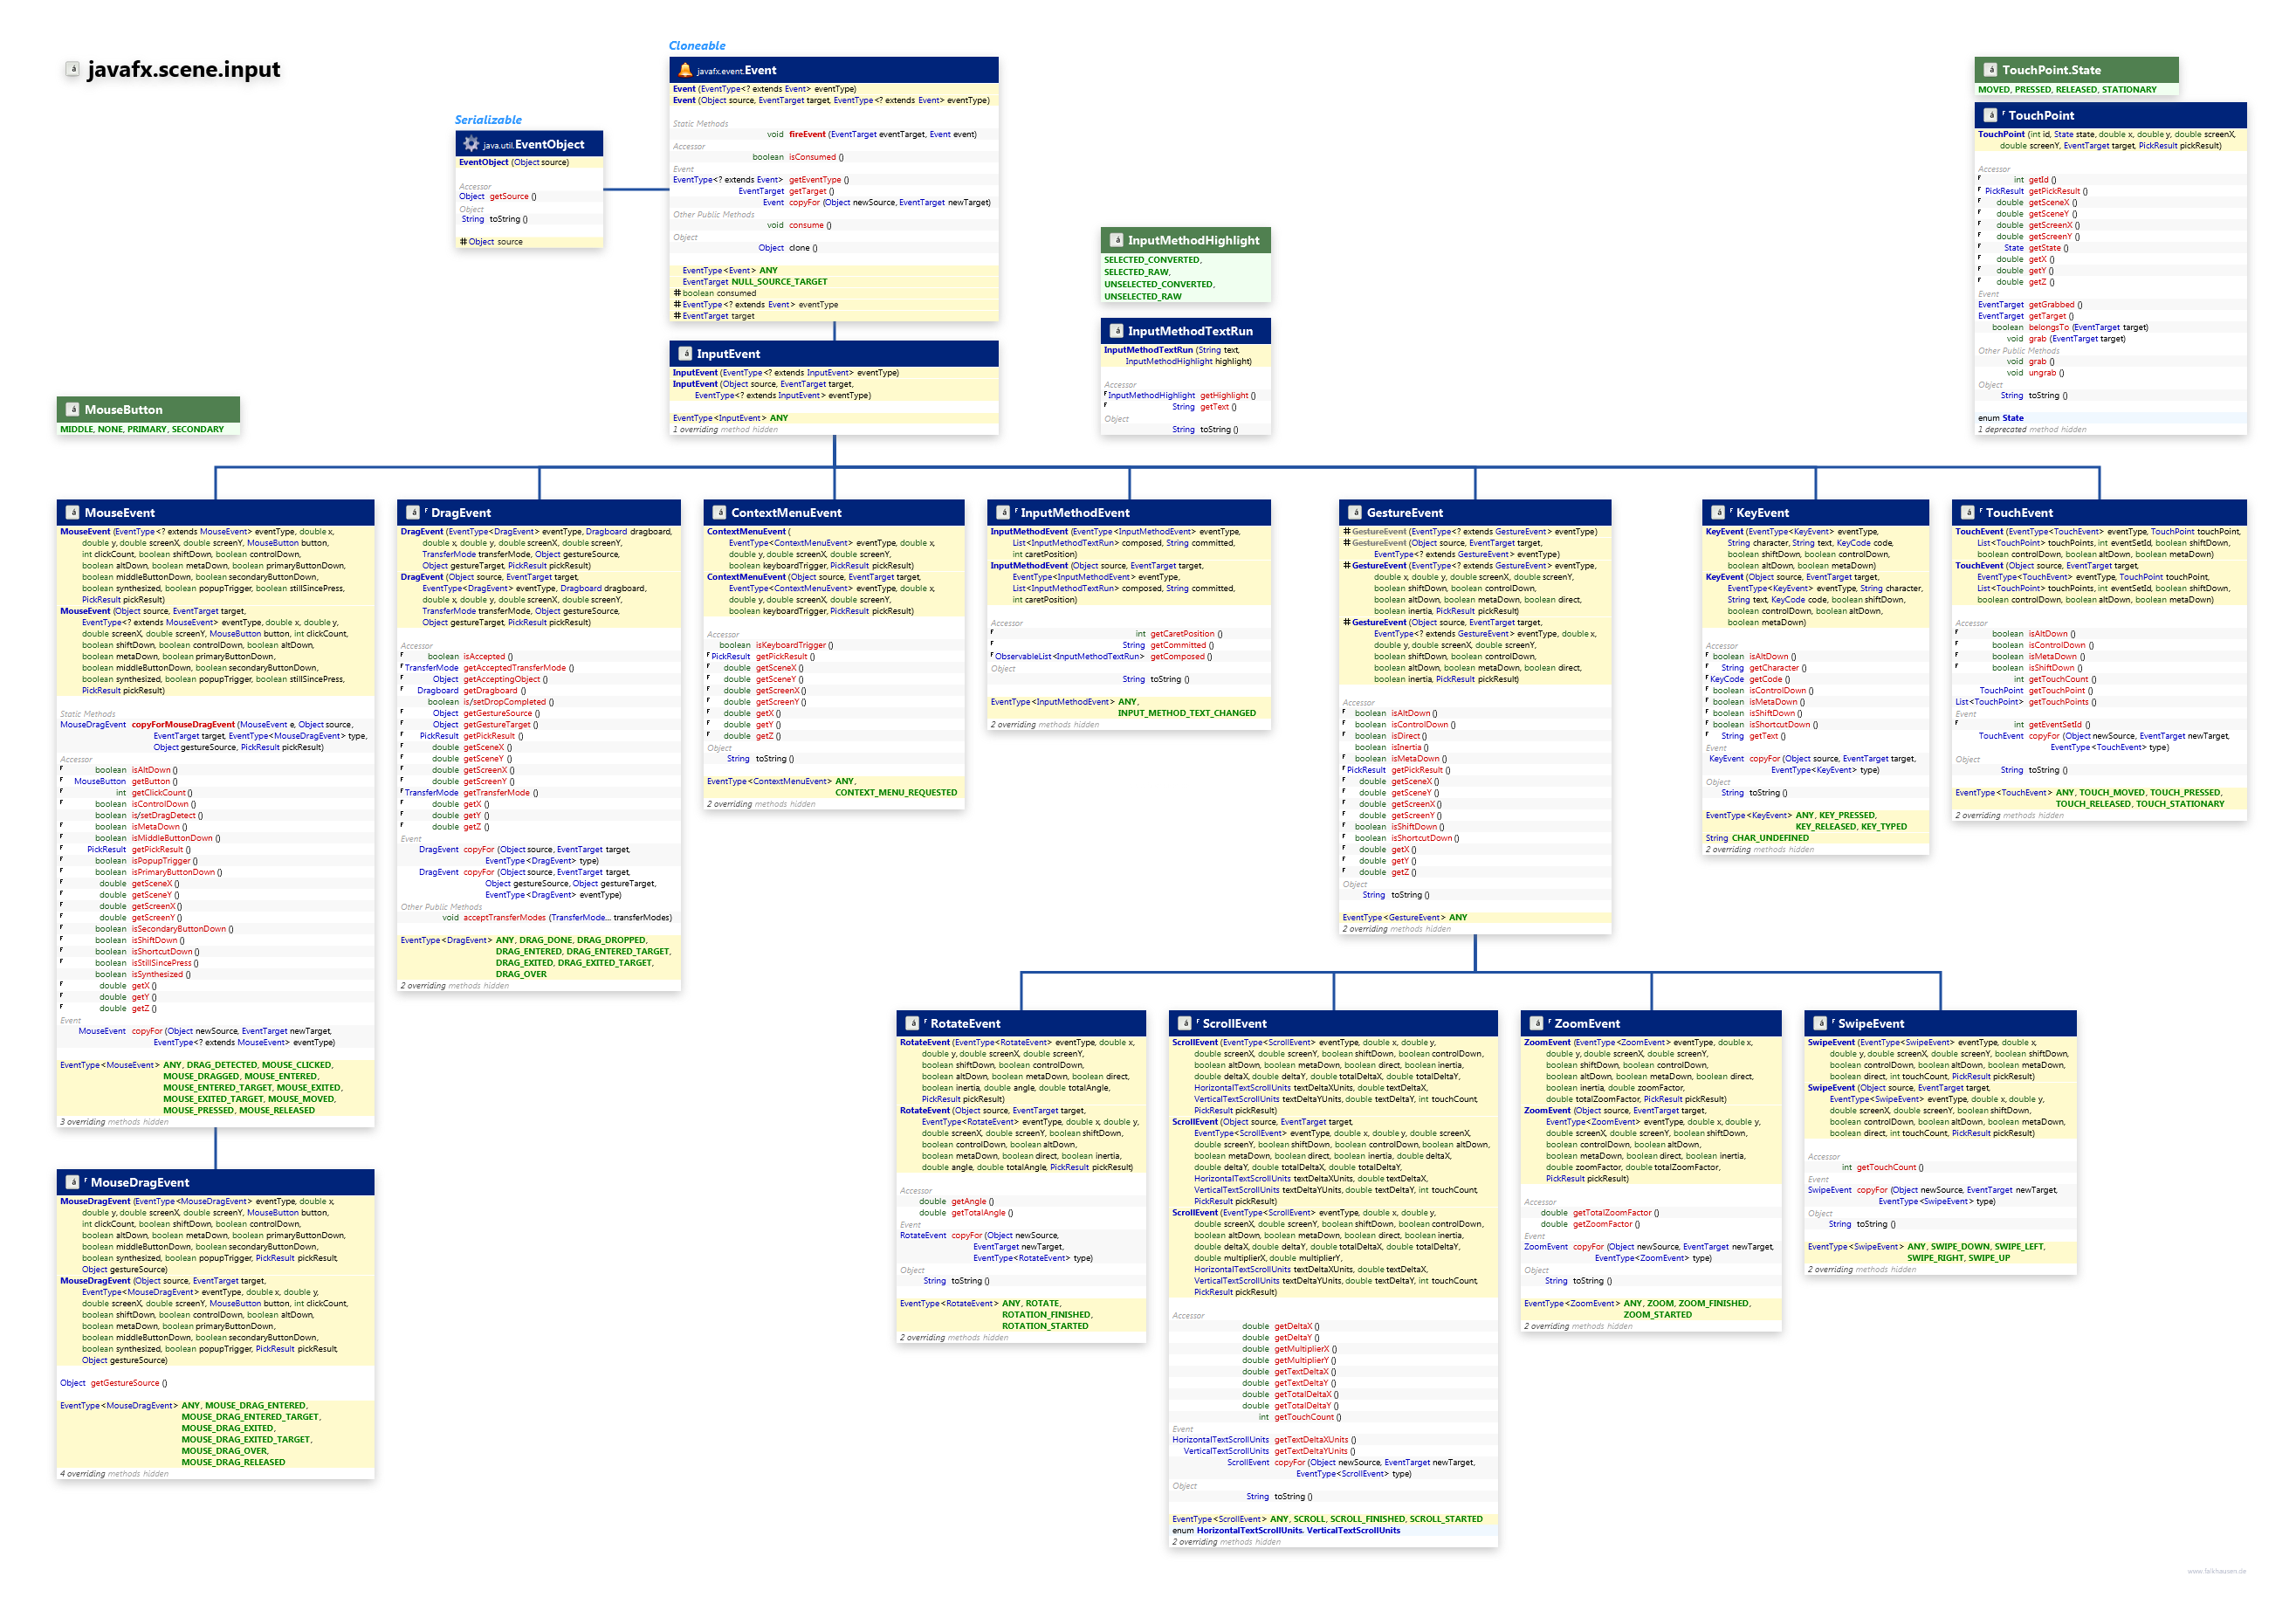 javafx.scene.input InputEvent class diagram and api documentation for JavaFX 8